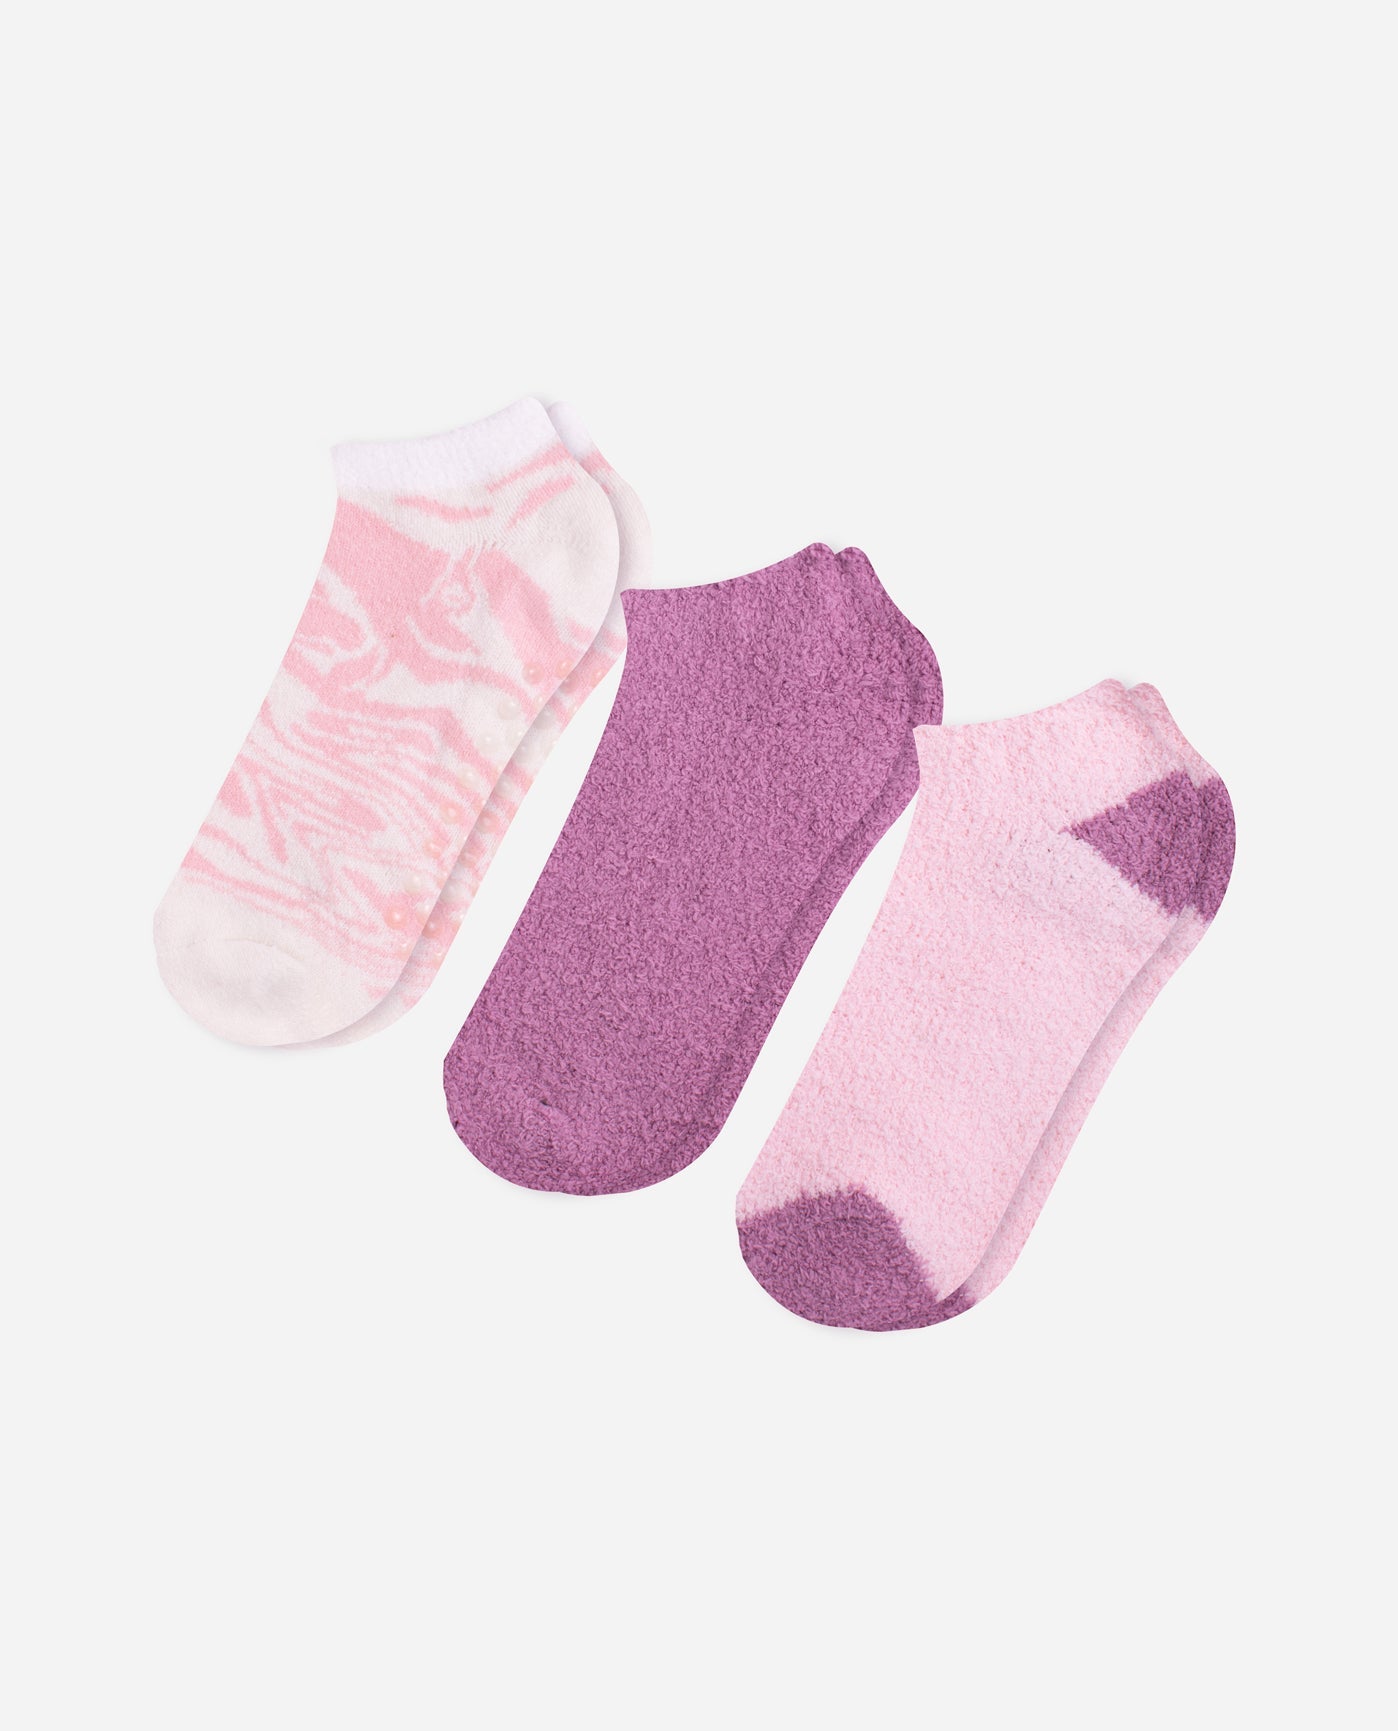 Danskin - Ladies Low Cut Socks - 6 Pairs